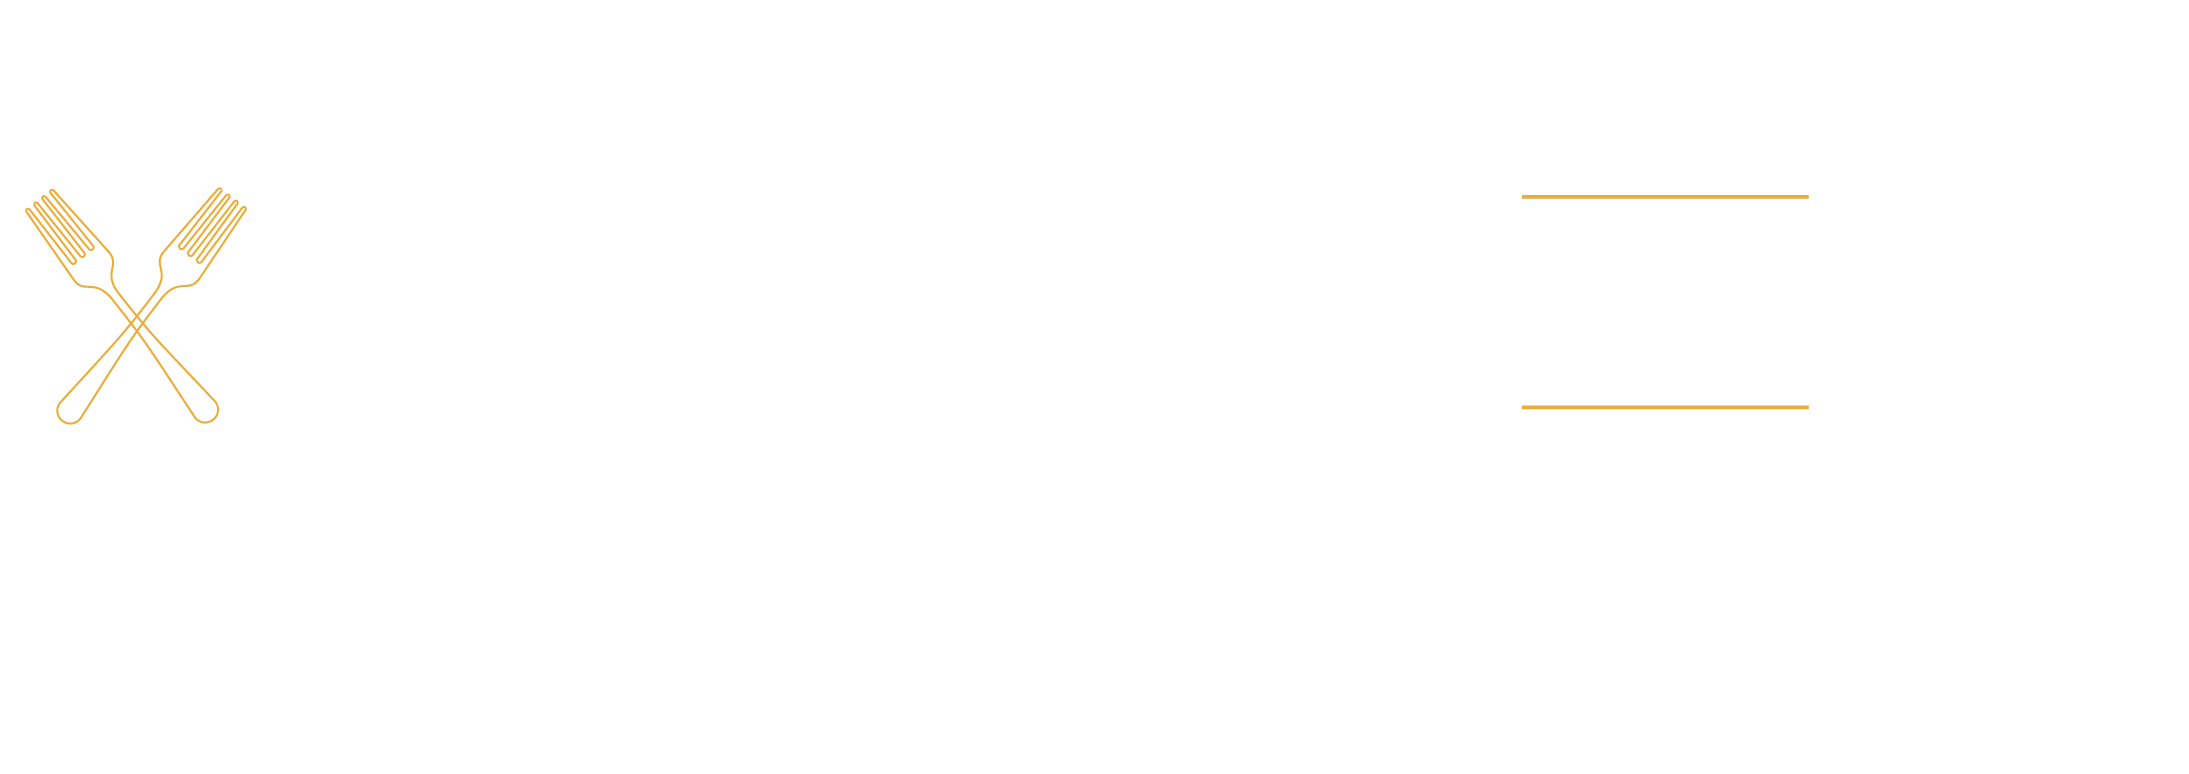 Taste The Greats